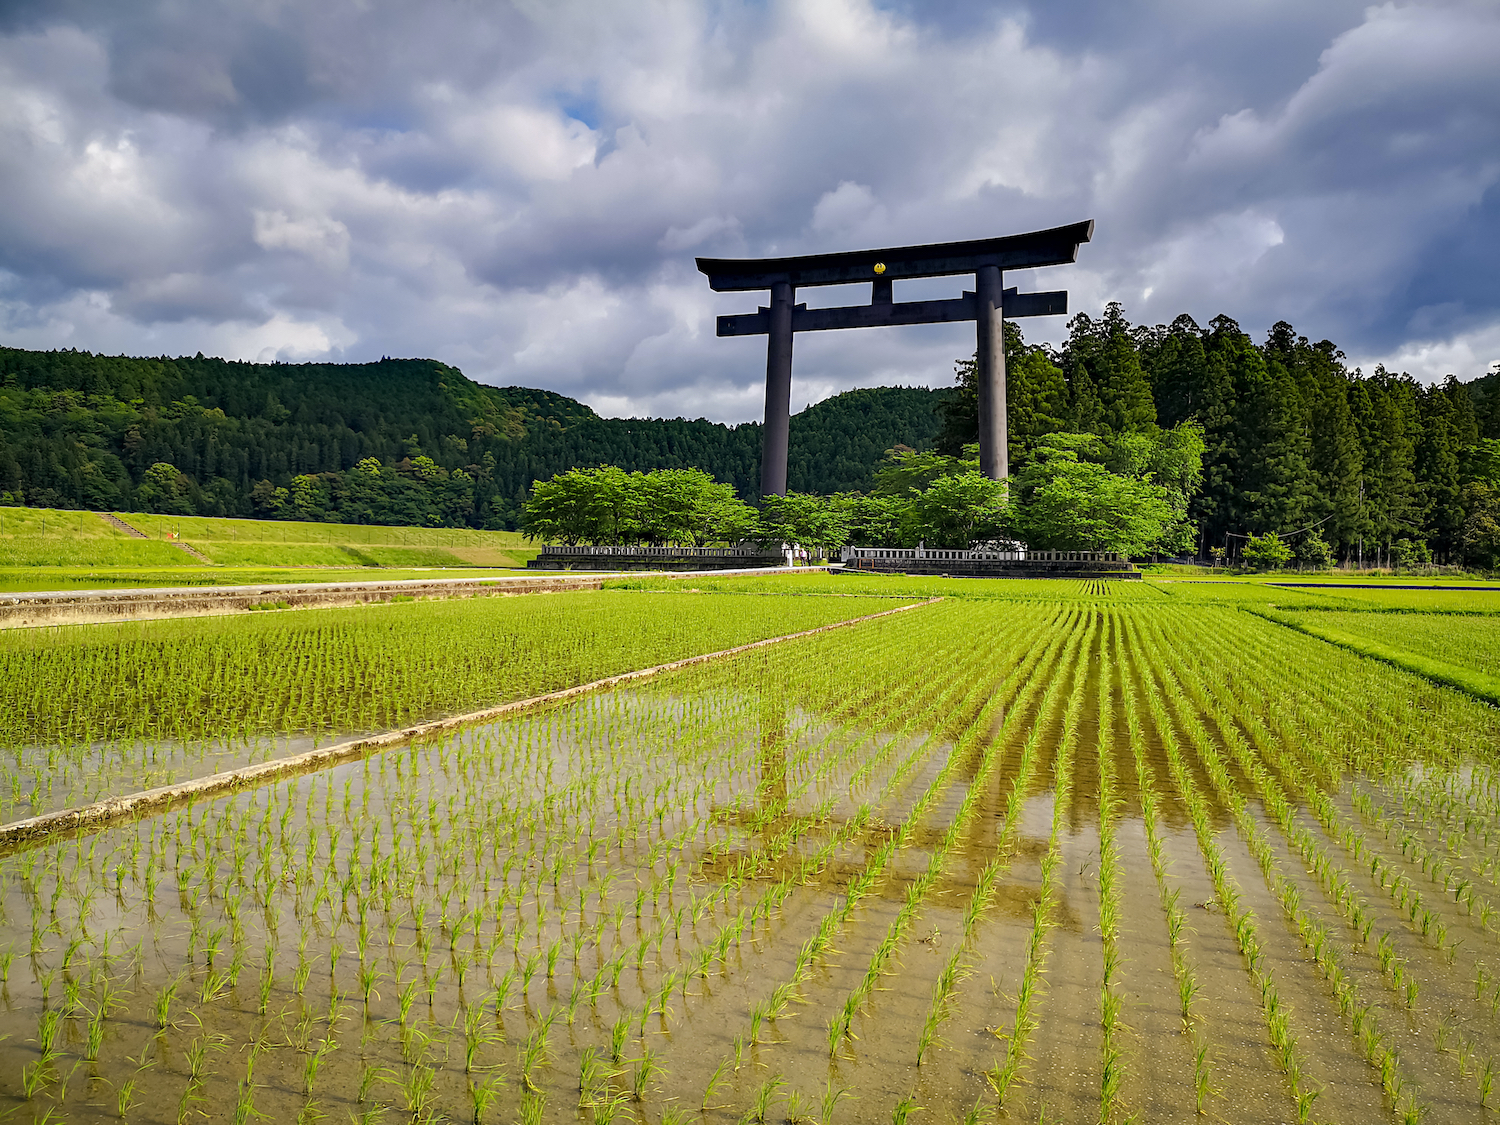 The world's largest Torii gate at the entrance of the sacred site of the Kumano Hongu Taisha on the Kumano Kodo pilgrimage trail in Wakayama, Japan